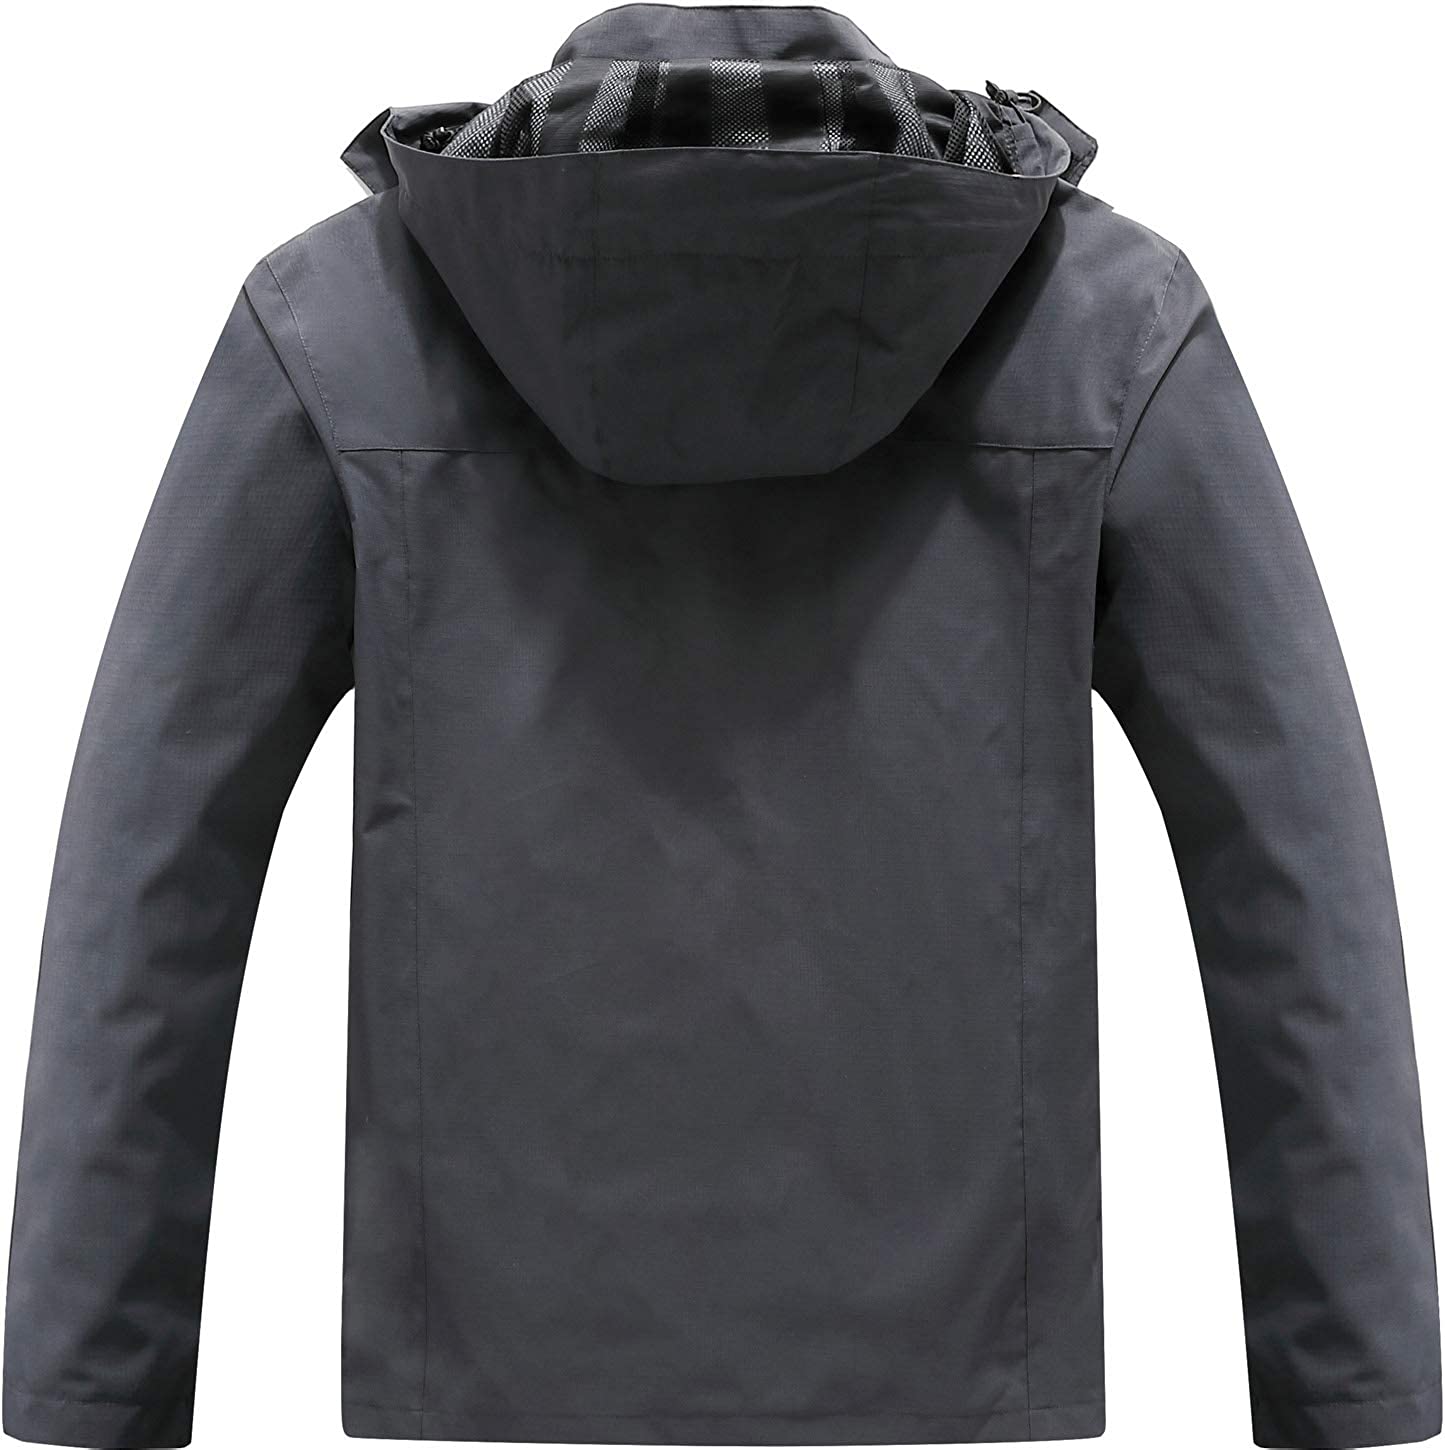 Men's Lightweight Waterproof Hooded Rain Jacket Outdoor Raincoat Shell ...